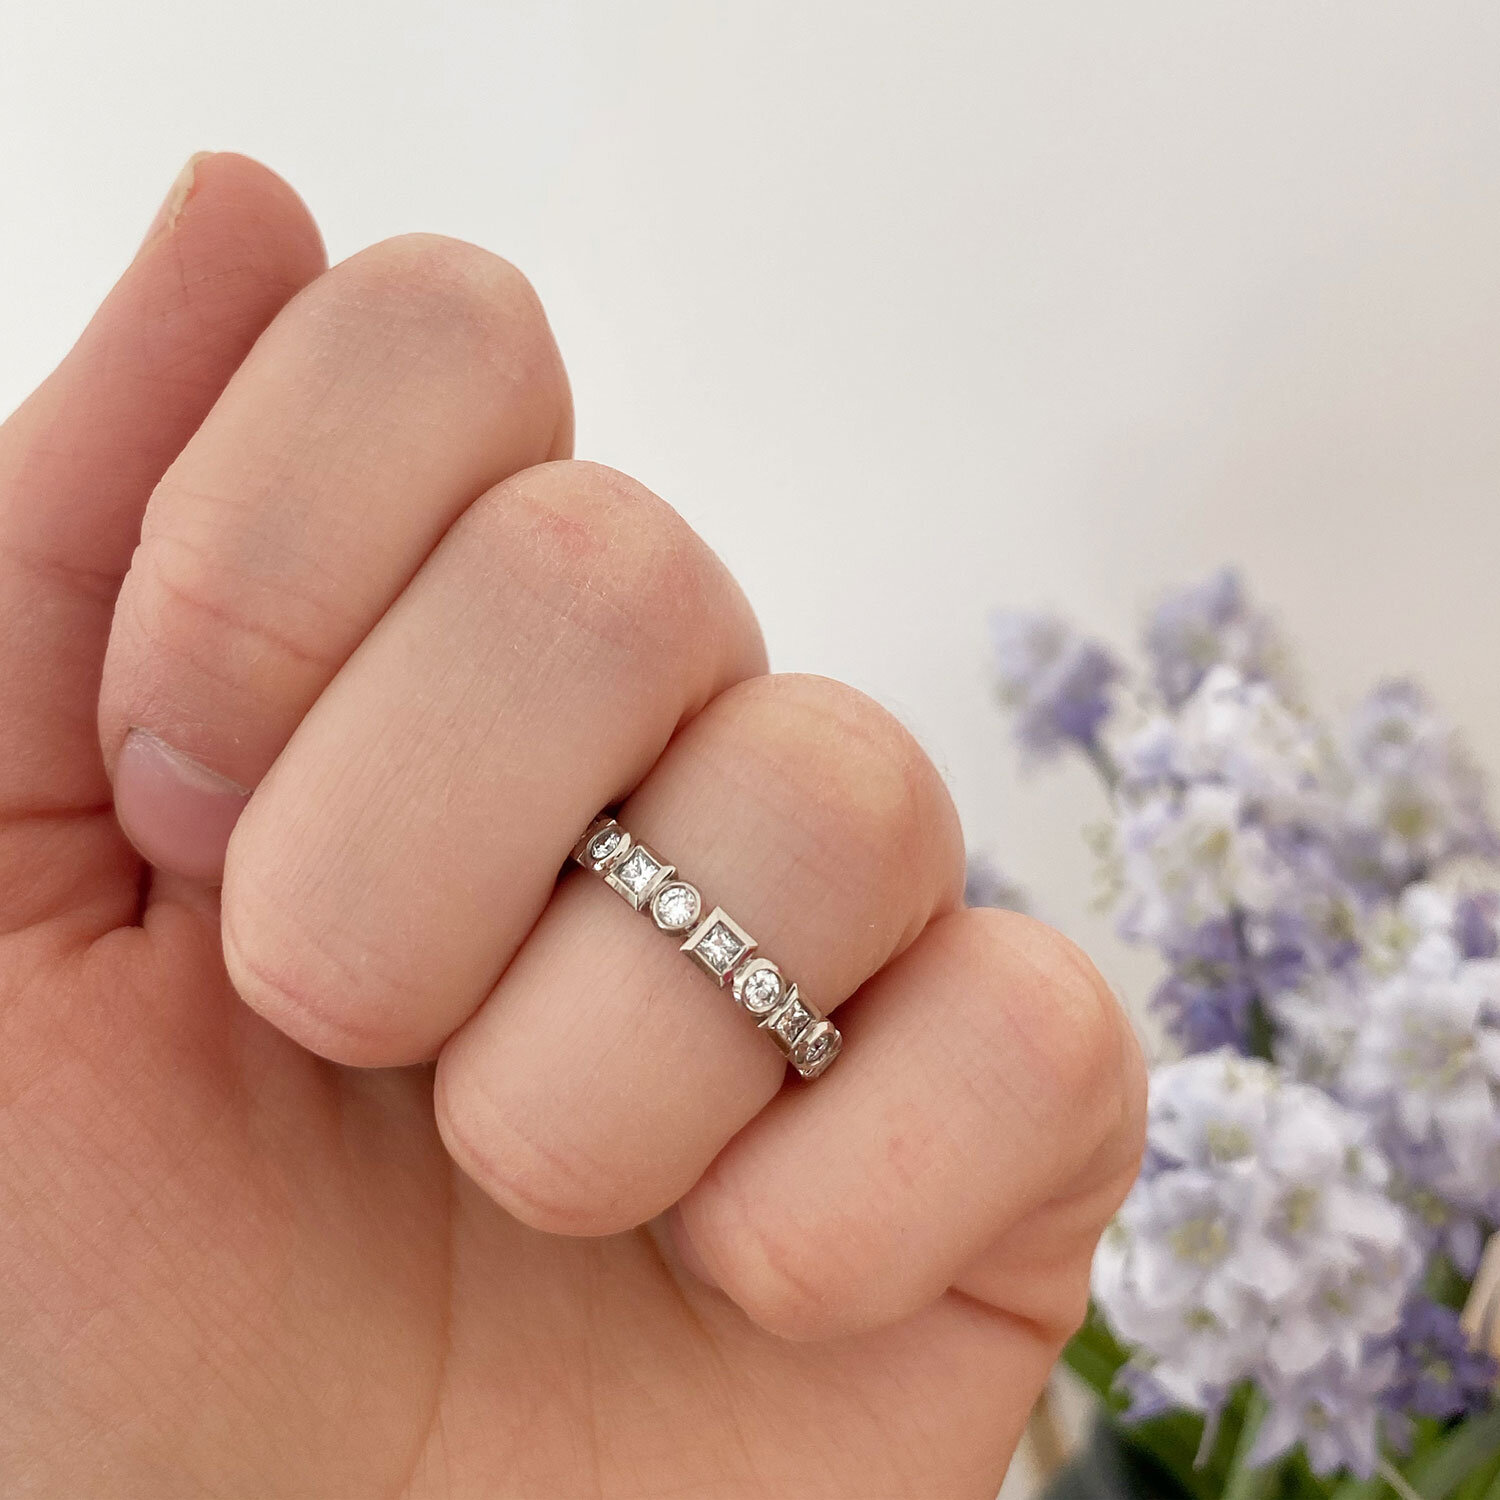 lottie-jewellery-diamond-eternity-ring-wedding-band-bespoke-hand-made-designer-jewellery-commissions-broadway-cotswolds-uk.jpg